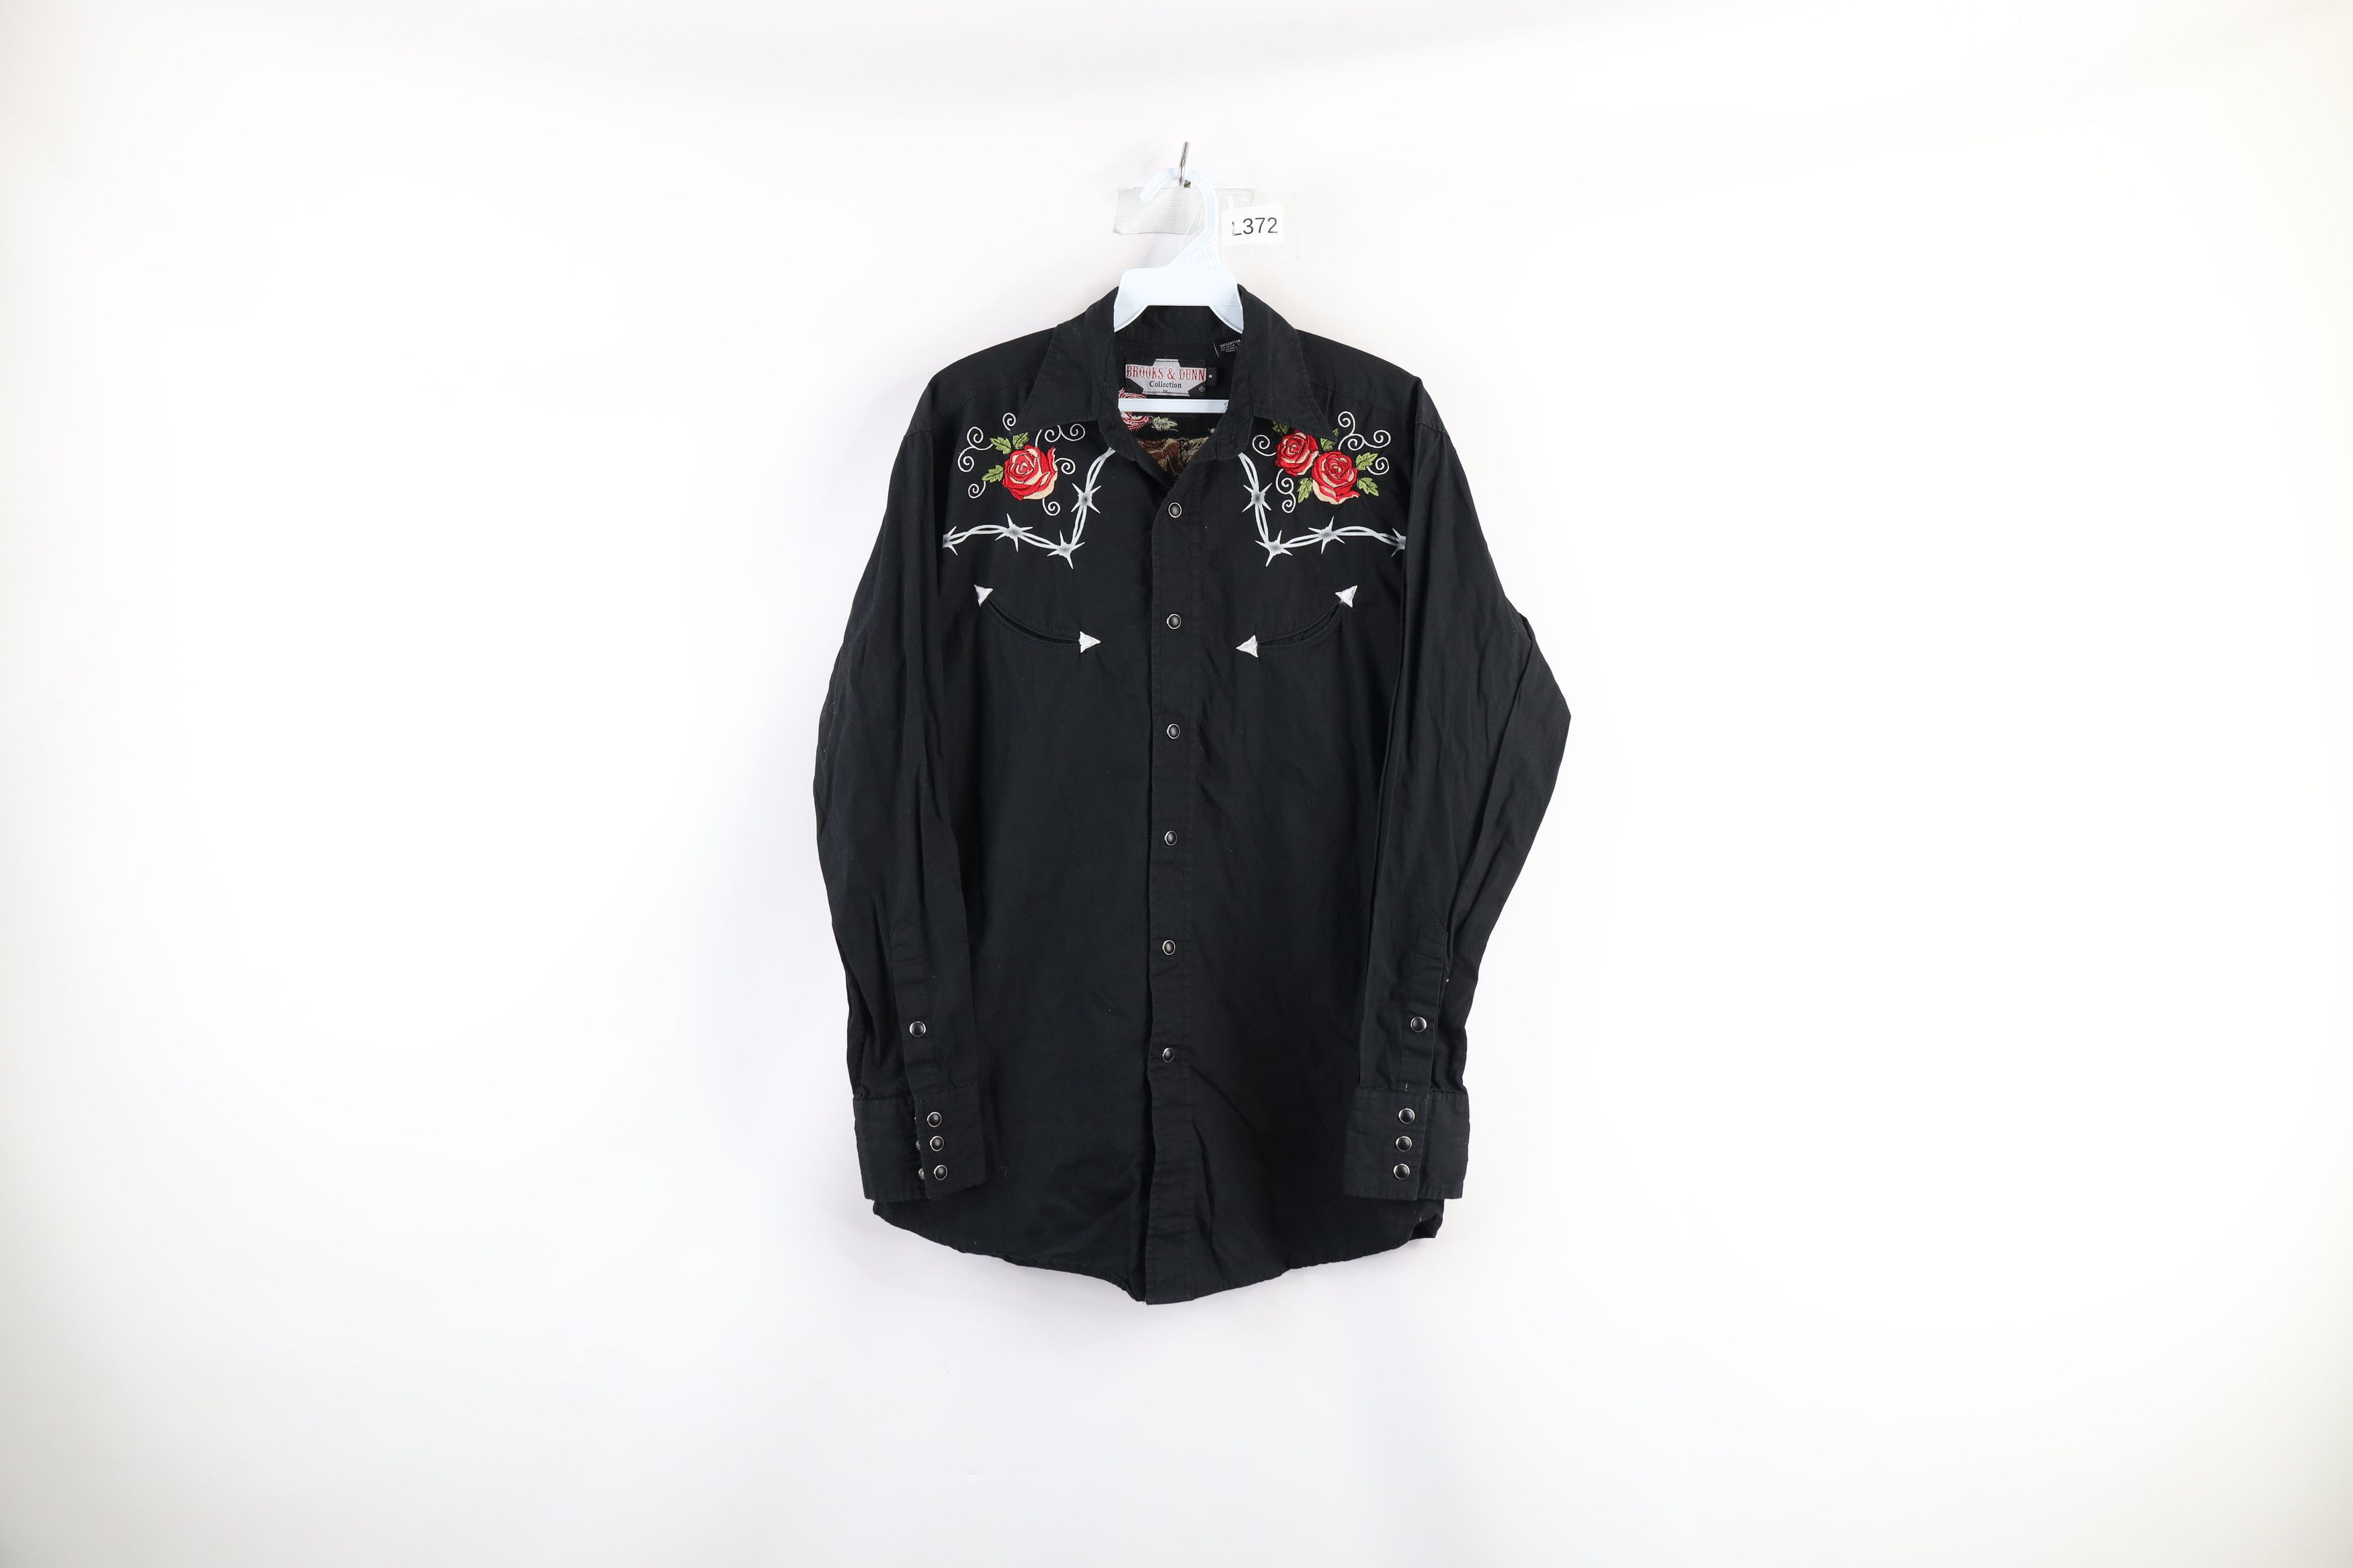 Vintage Vintage Rockabilly Rose Skull Snap Button Shirt Black Size US S / EU 44-46 / 1 - 1 Preview